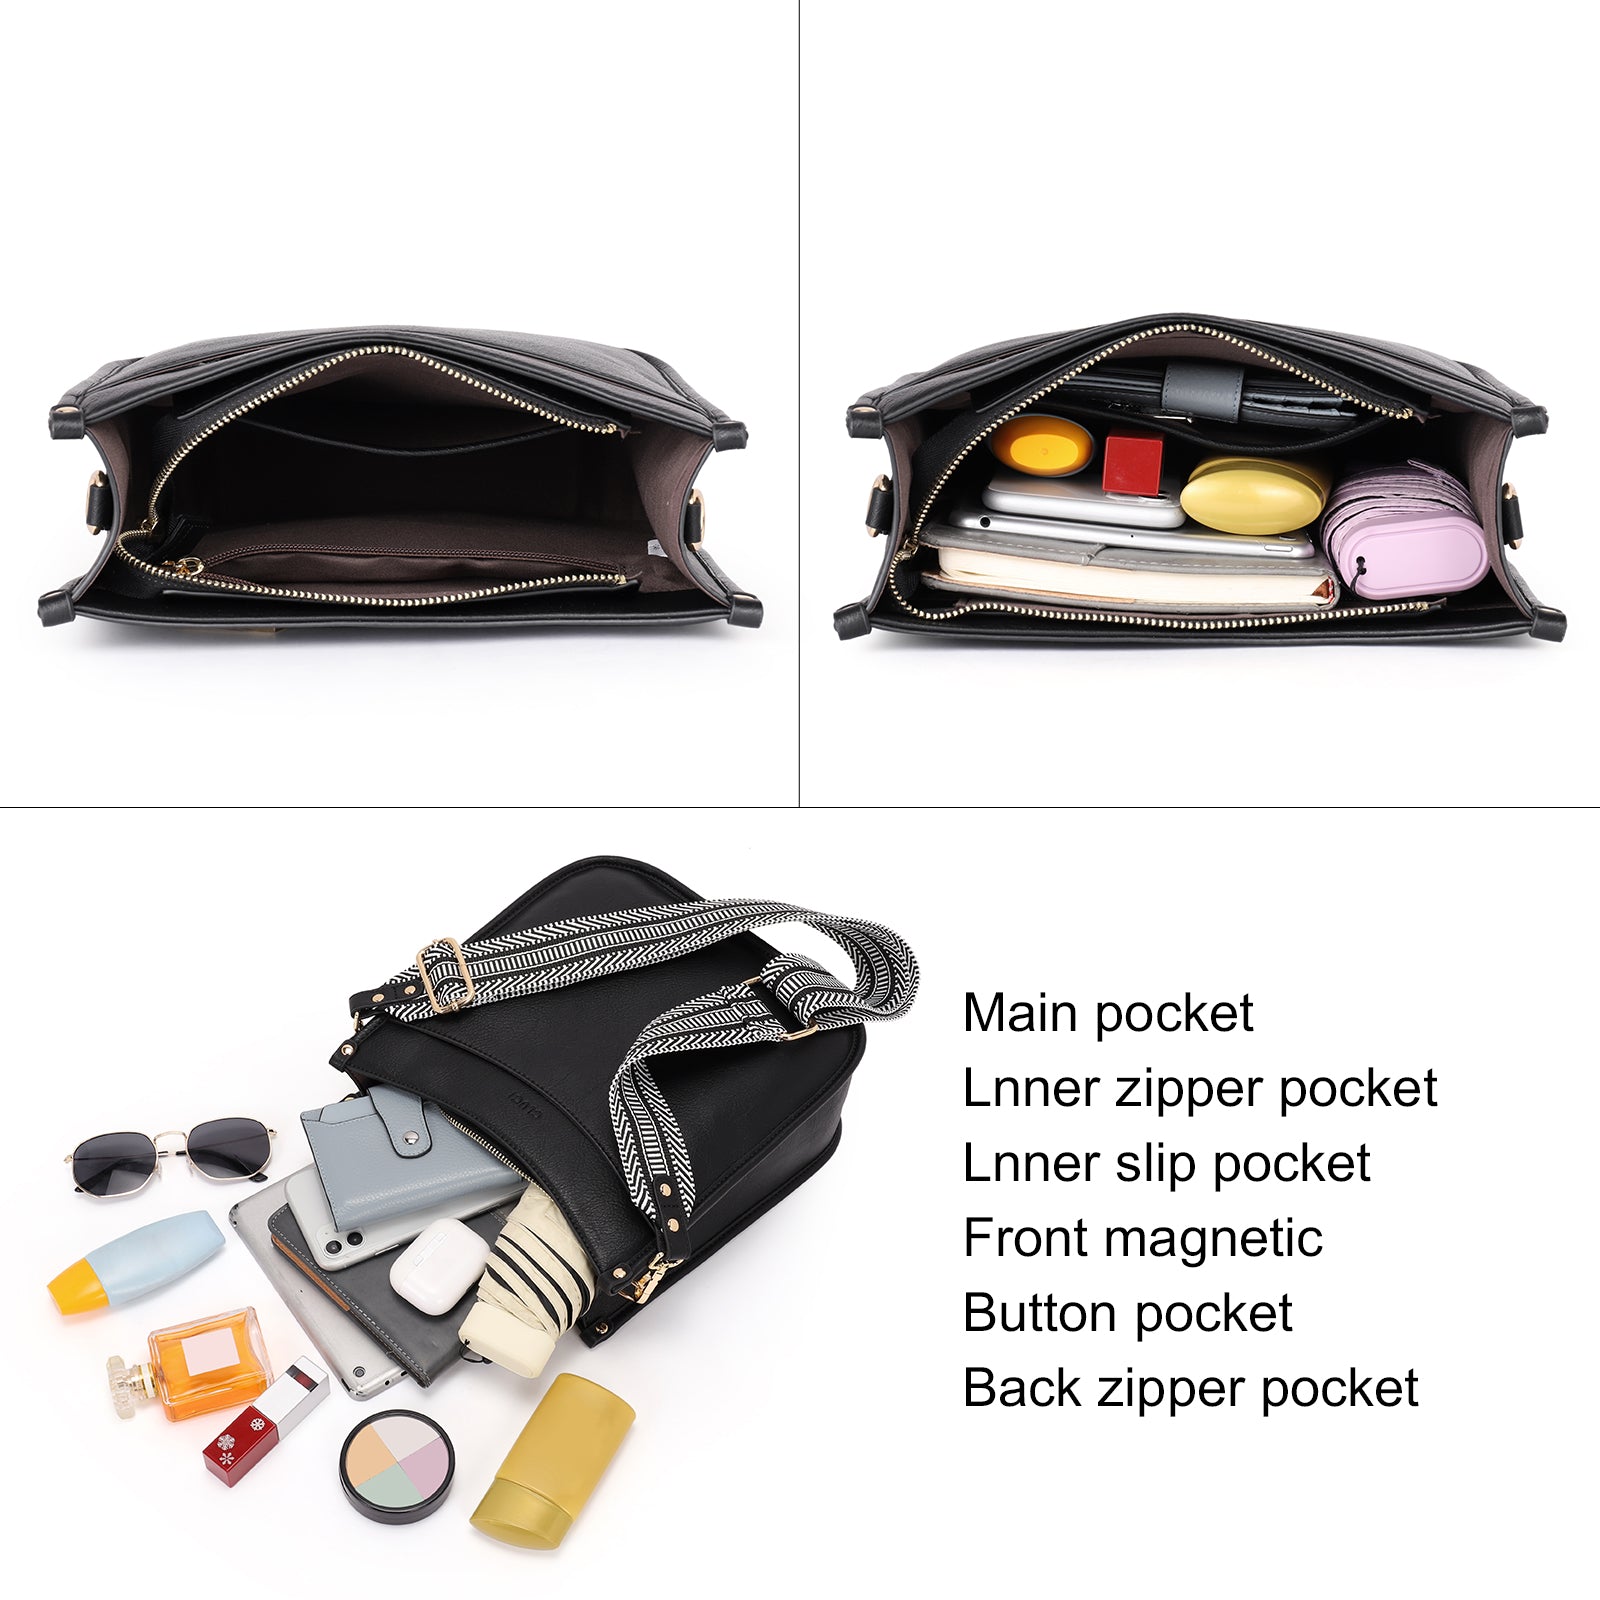 Stylish 2pcs Medium Hobo handbag and Crossbody Bag with 2 Adjust Guitar Strap